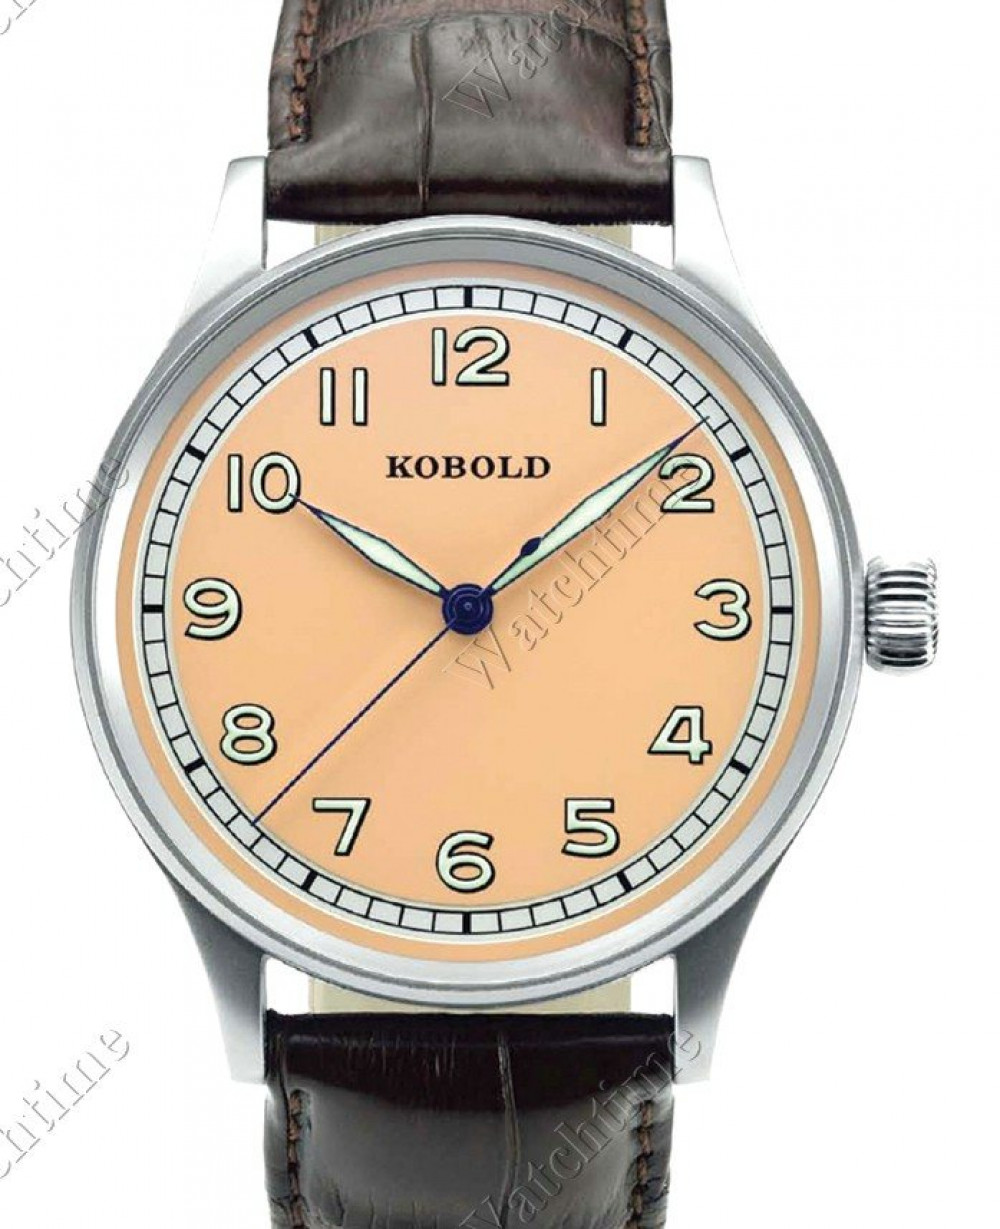 Zegarek firmy Kobold, model Sir Ernest Shackleton